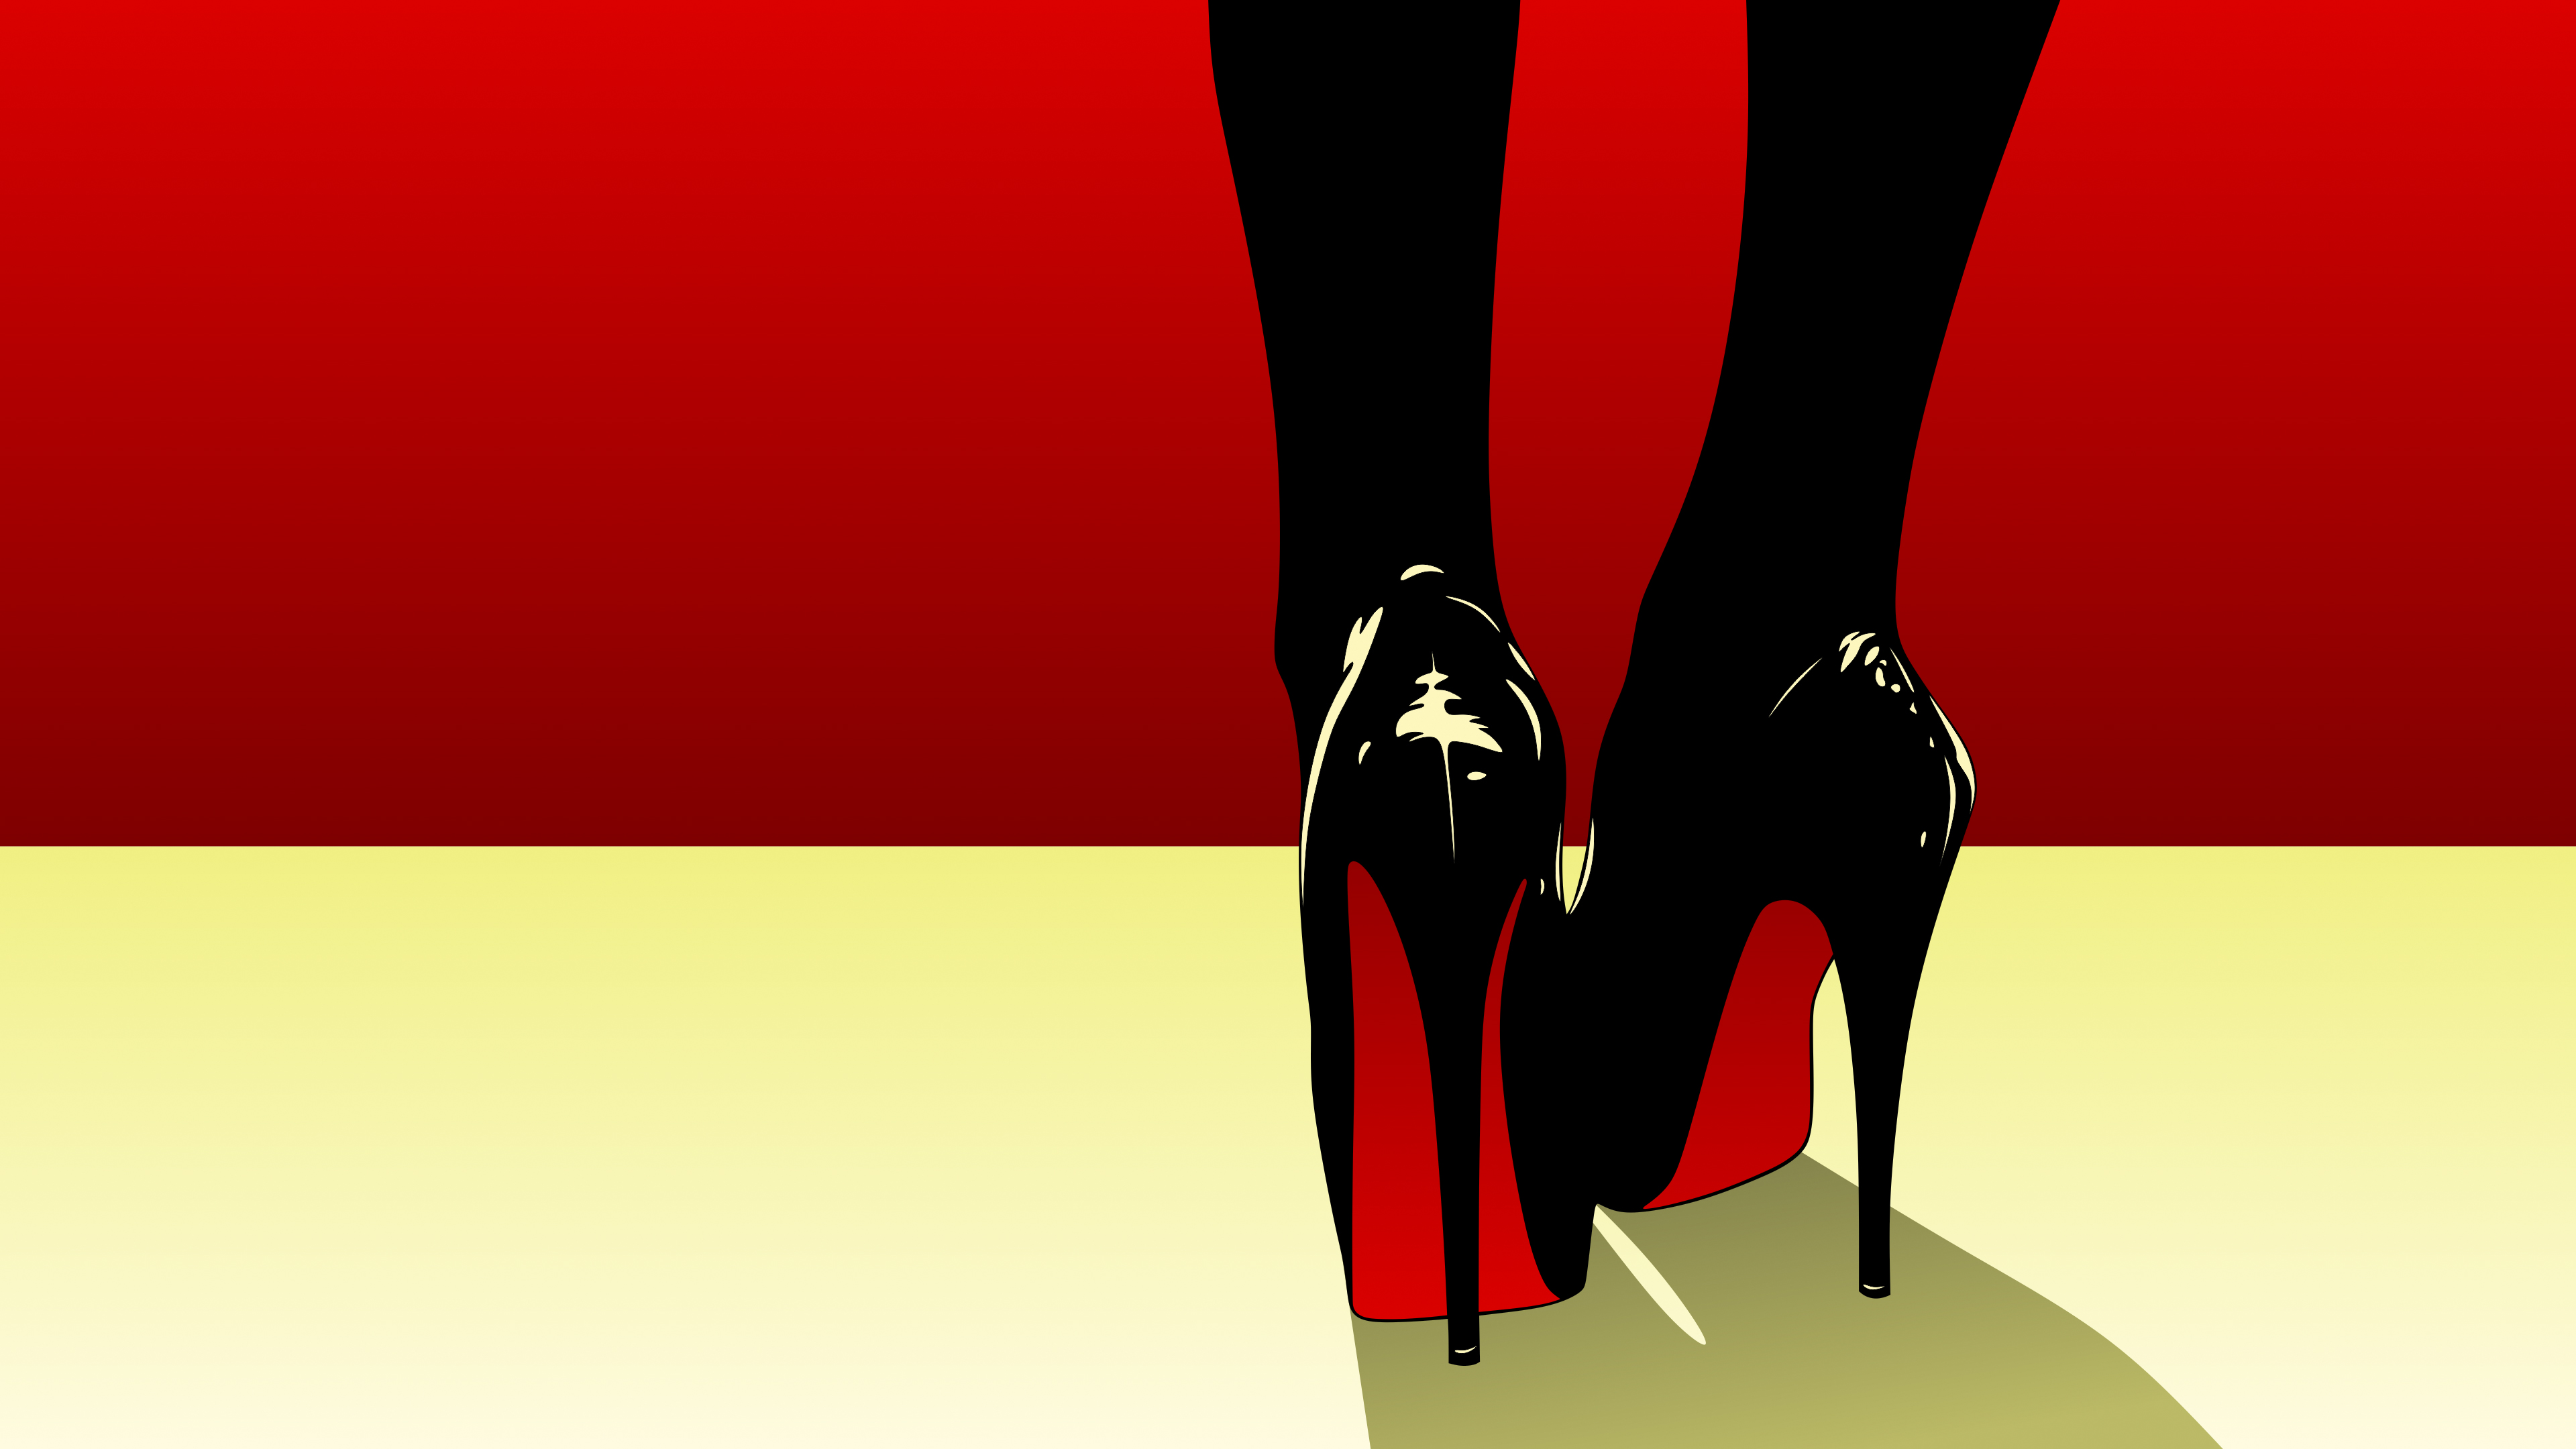 General 3840x2160 red yellow black vector feet shoes minimalism high heels Louboutin stilettoes artwork digital art simple background closeup